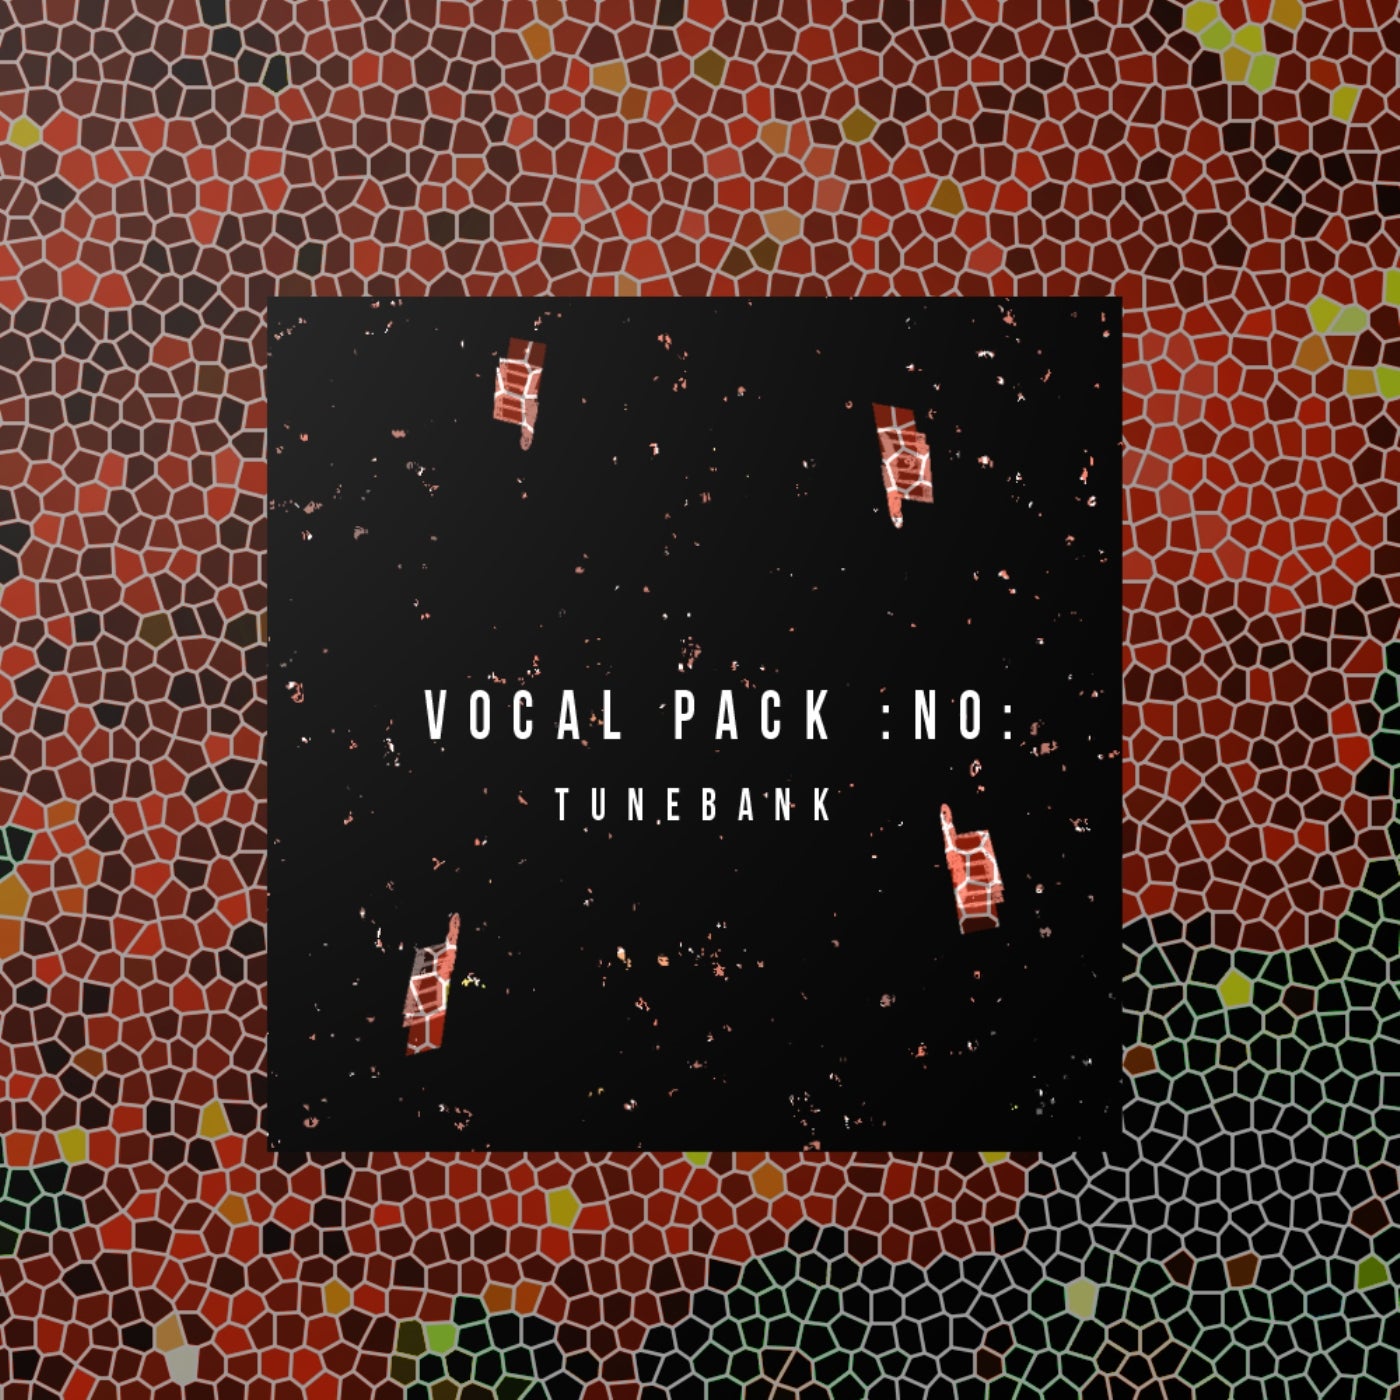 Vocal Pack No